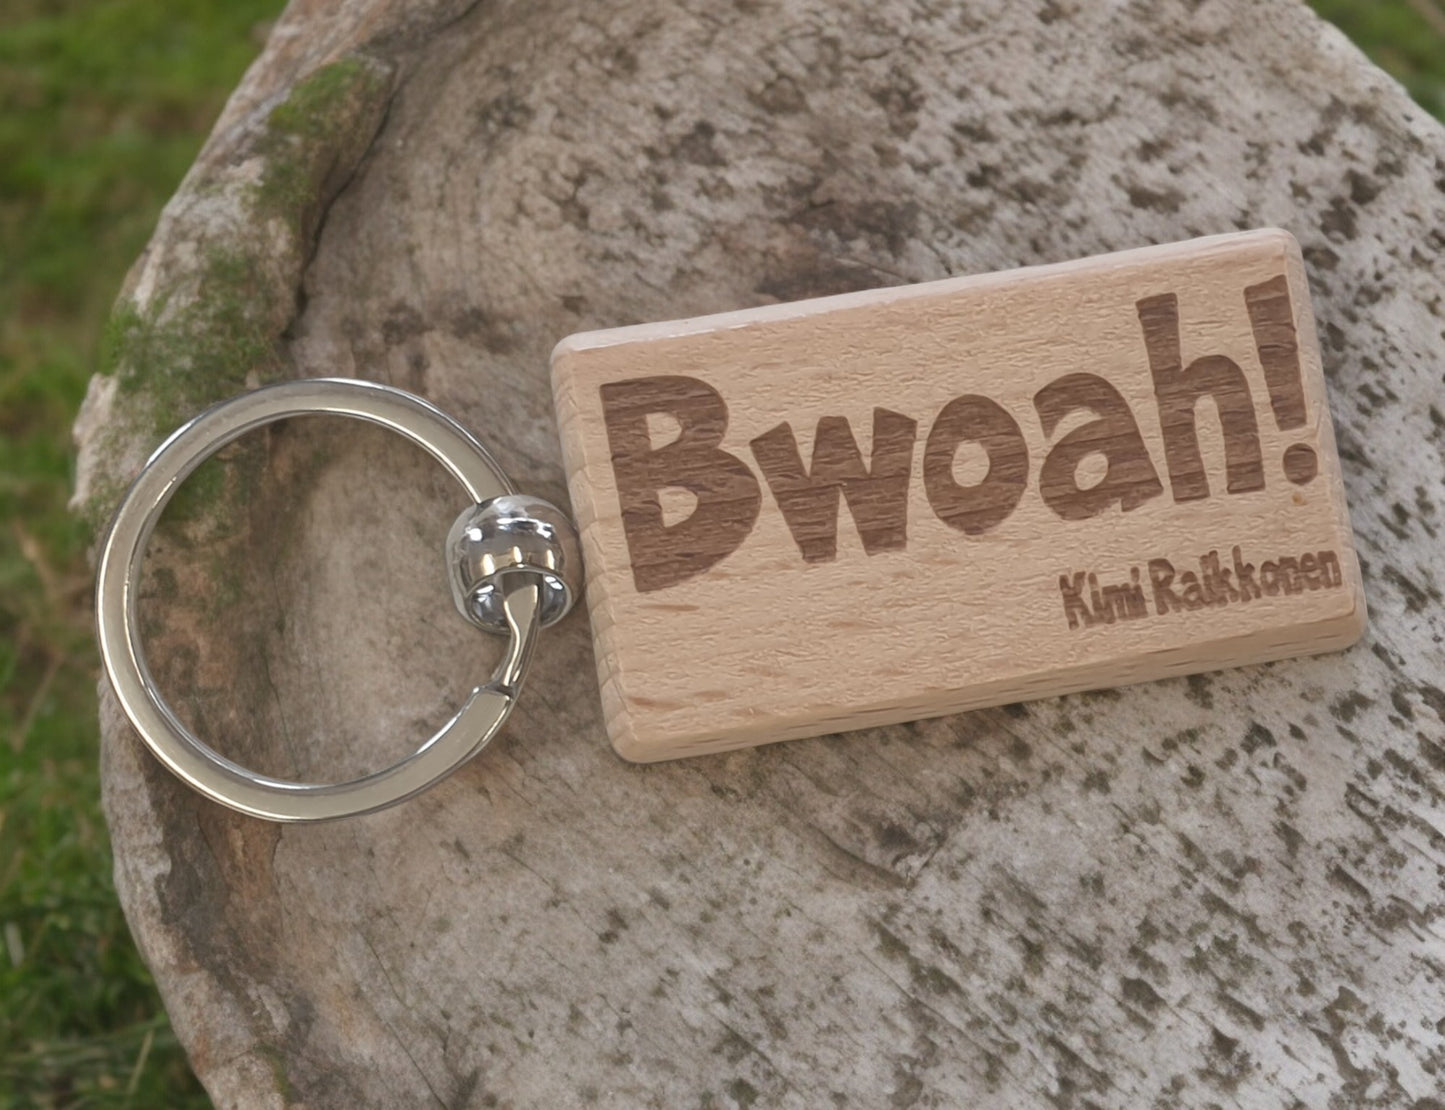 Kimi Raikkonen Keyring Gift Bwoah Engraved Wooden Key Fob Fun Novelty Nice F1 Present